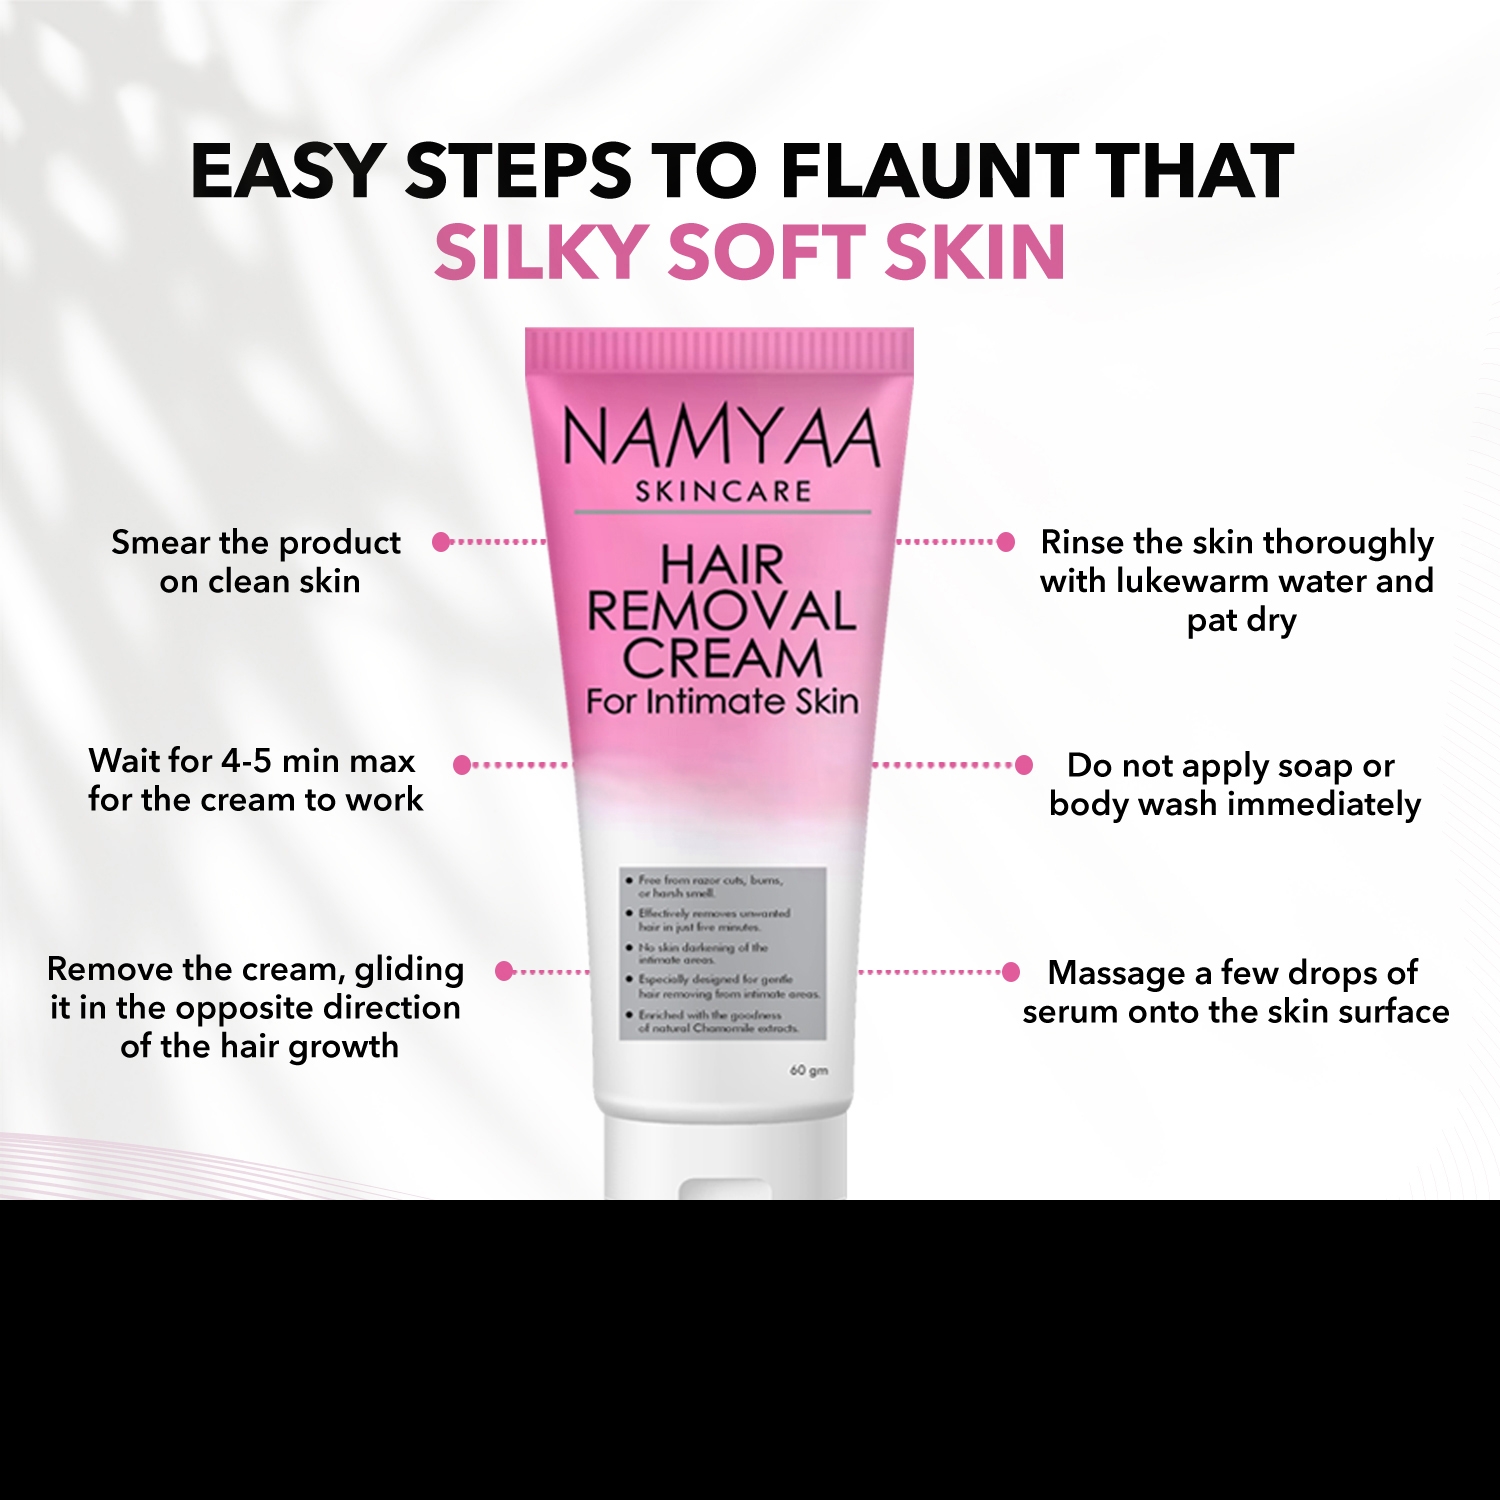 Namyaa Hair Removal Cream || Namyaa Hair Removing Cream for Intimate Skin -  YouTube